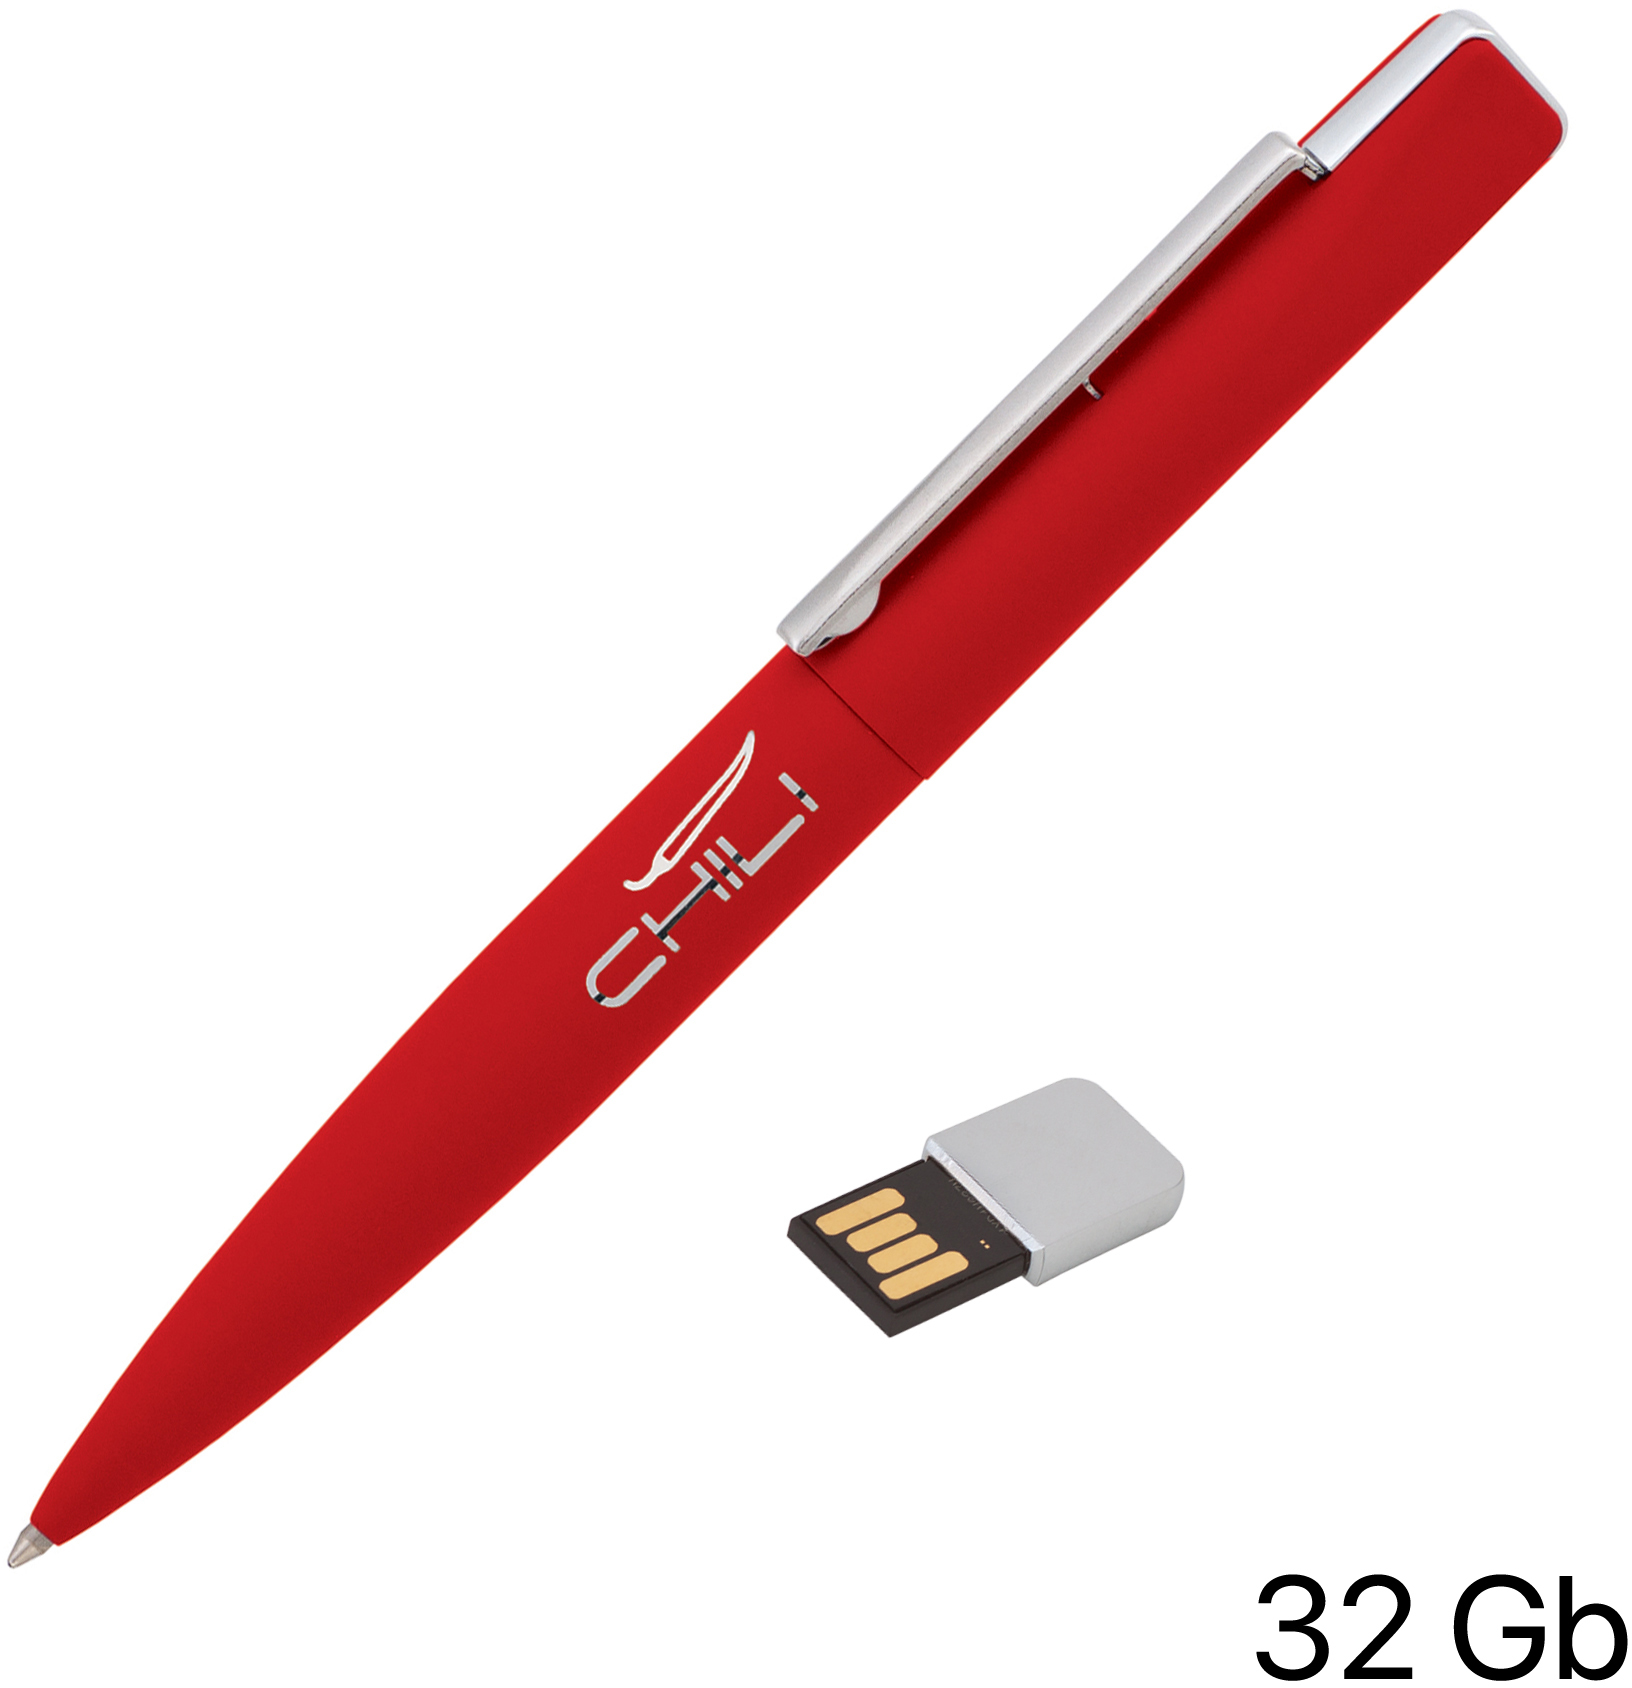 Артикул: E6828-4S/32Gb — Ручка шариковая "Callisto" с флеш-картой 32Gb, покрытие soft touch